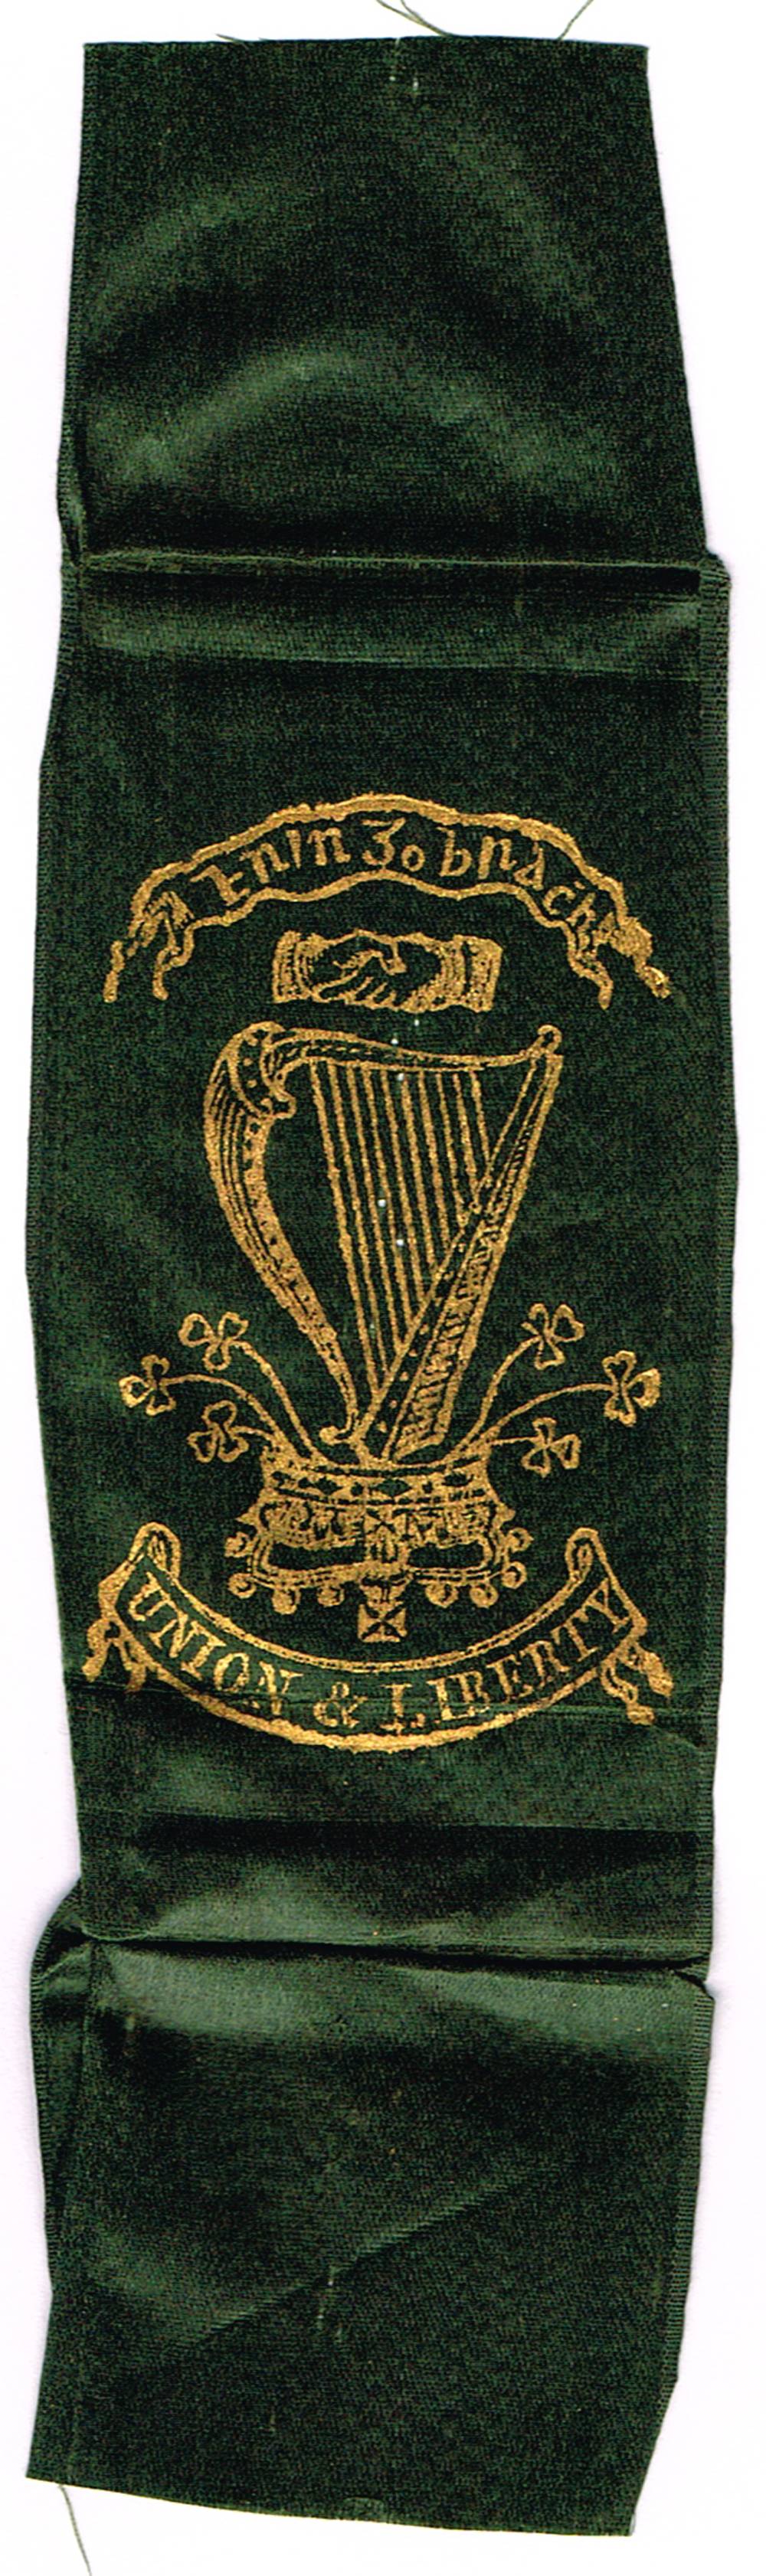 Circa 1798. United Irishmen ribbon badge. at Whyte's Auctions